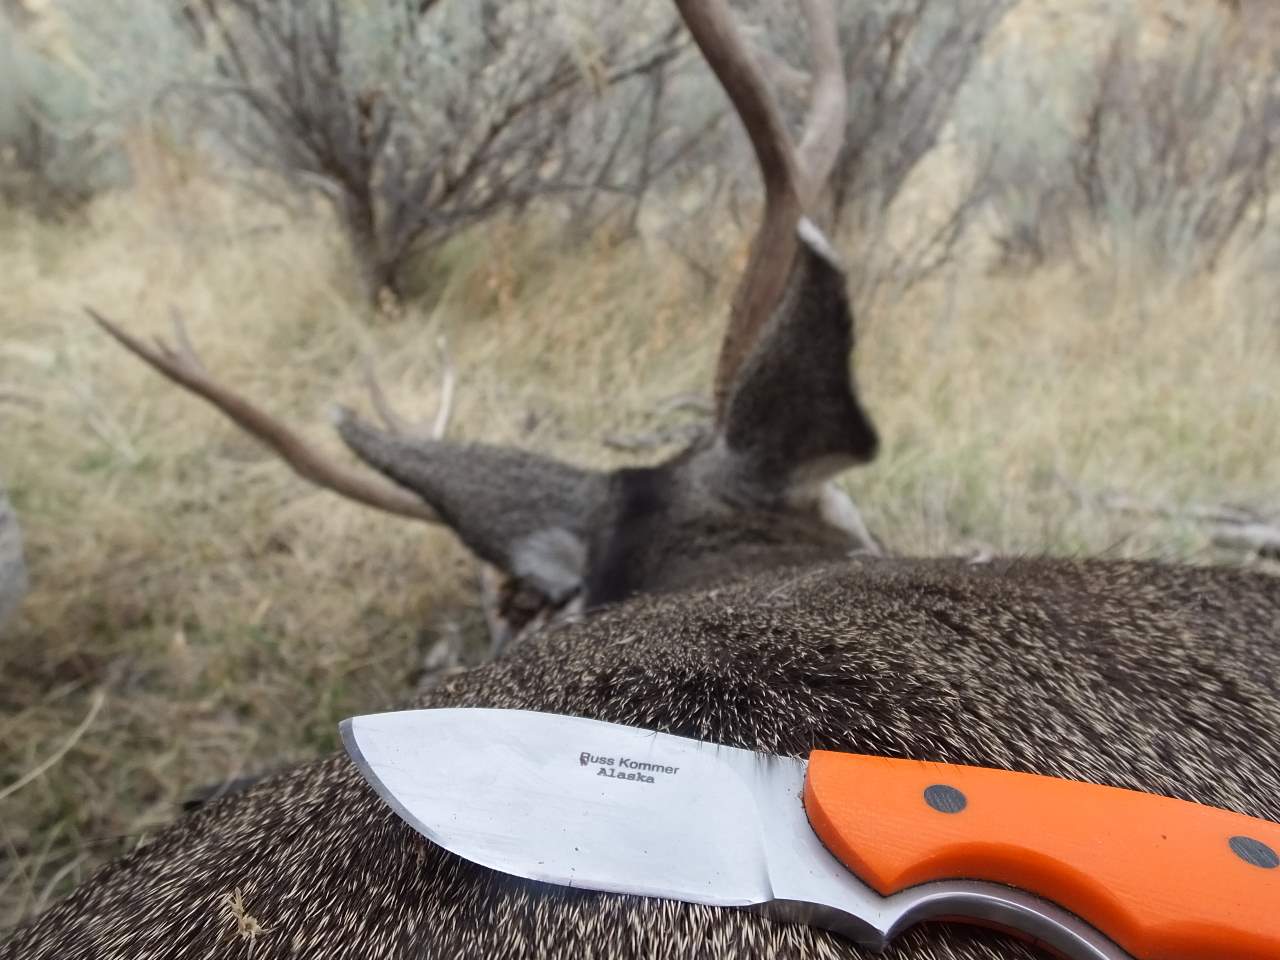 My favorite hunting knife, a Russ Kommer custom small skinner.